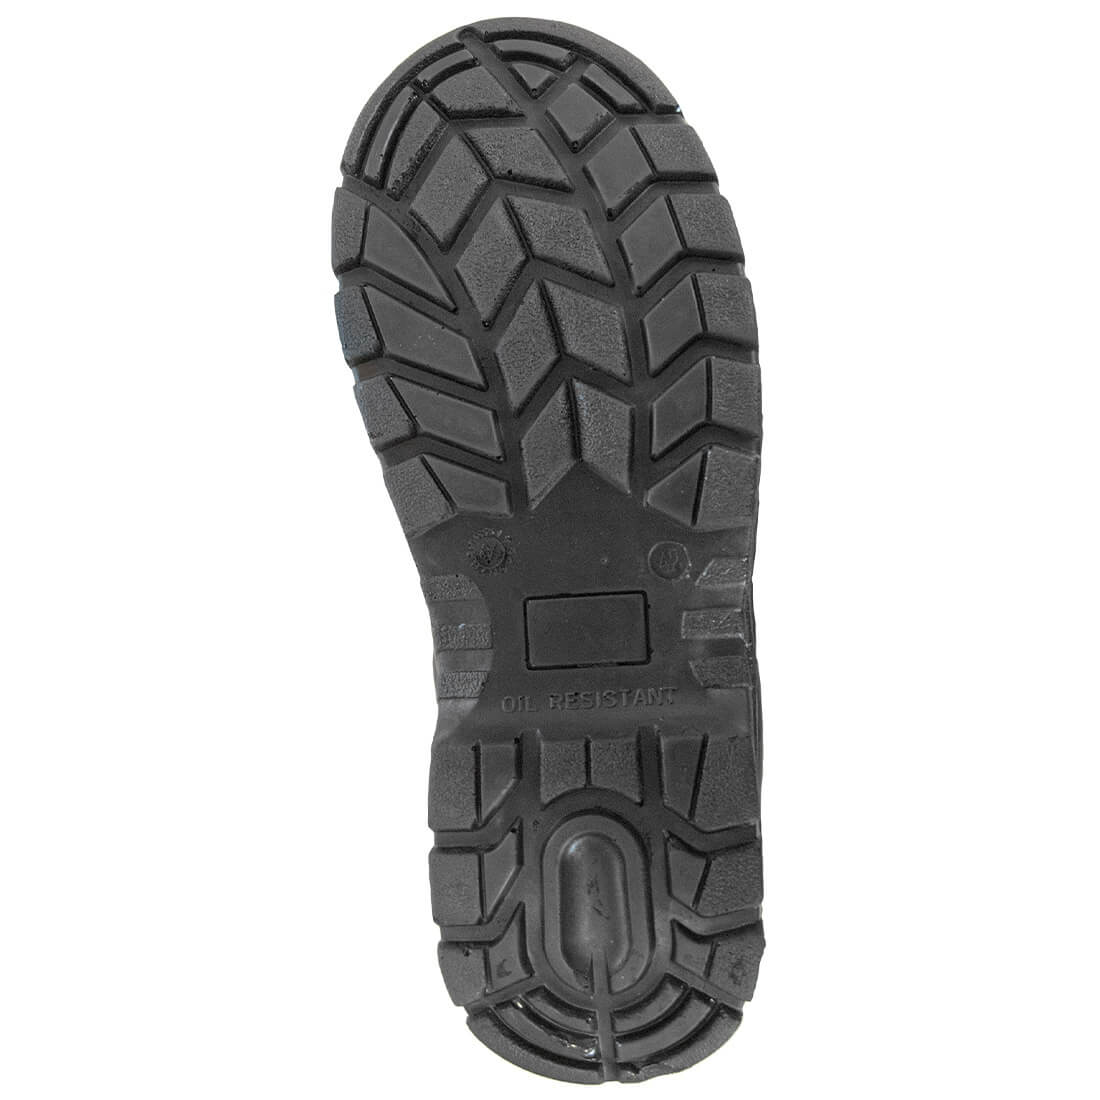 Ghete Trekker Plus Compositelite™ S1P - Incaltaminte de protectie | Bocanci, Pantofi, Sandale, Cizme